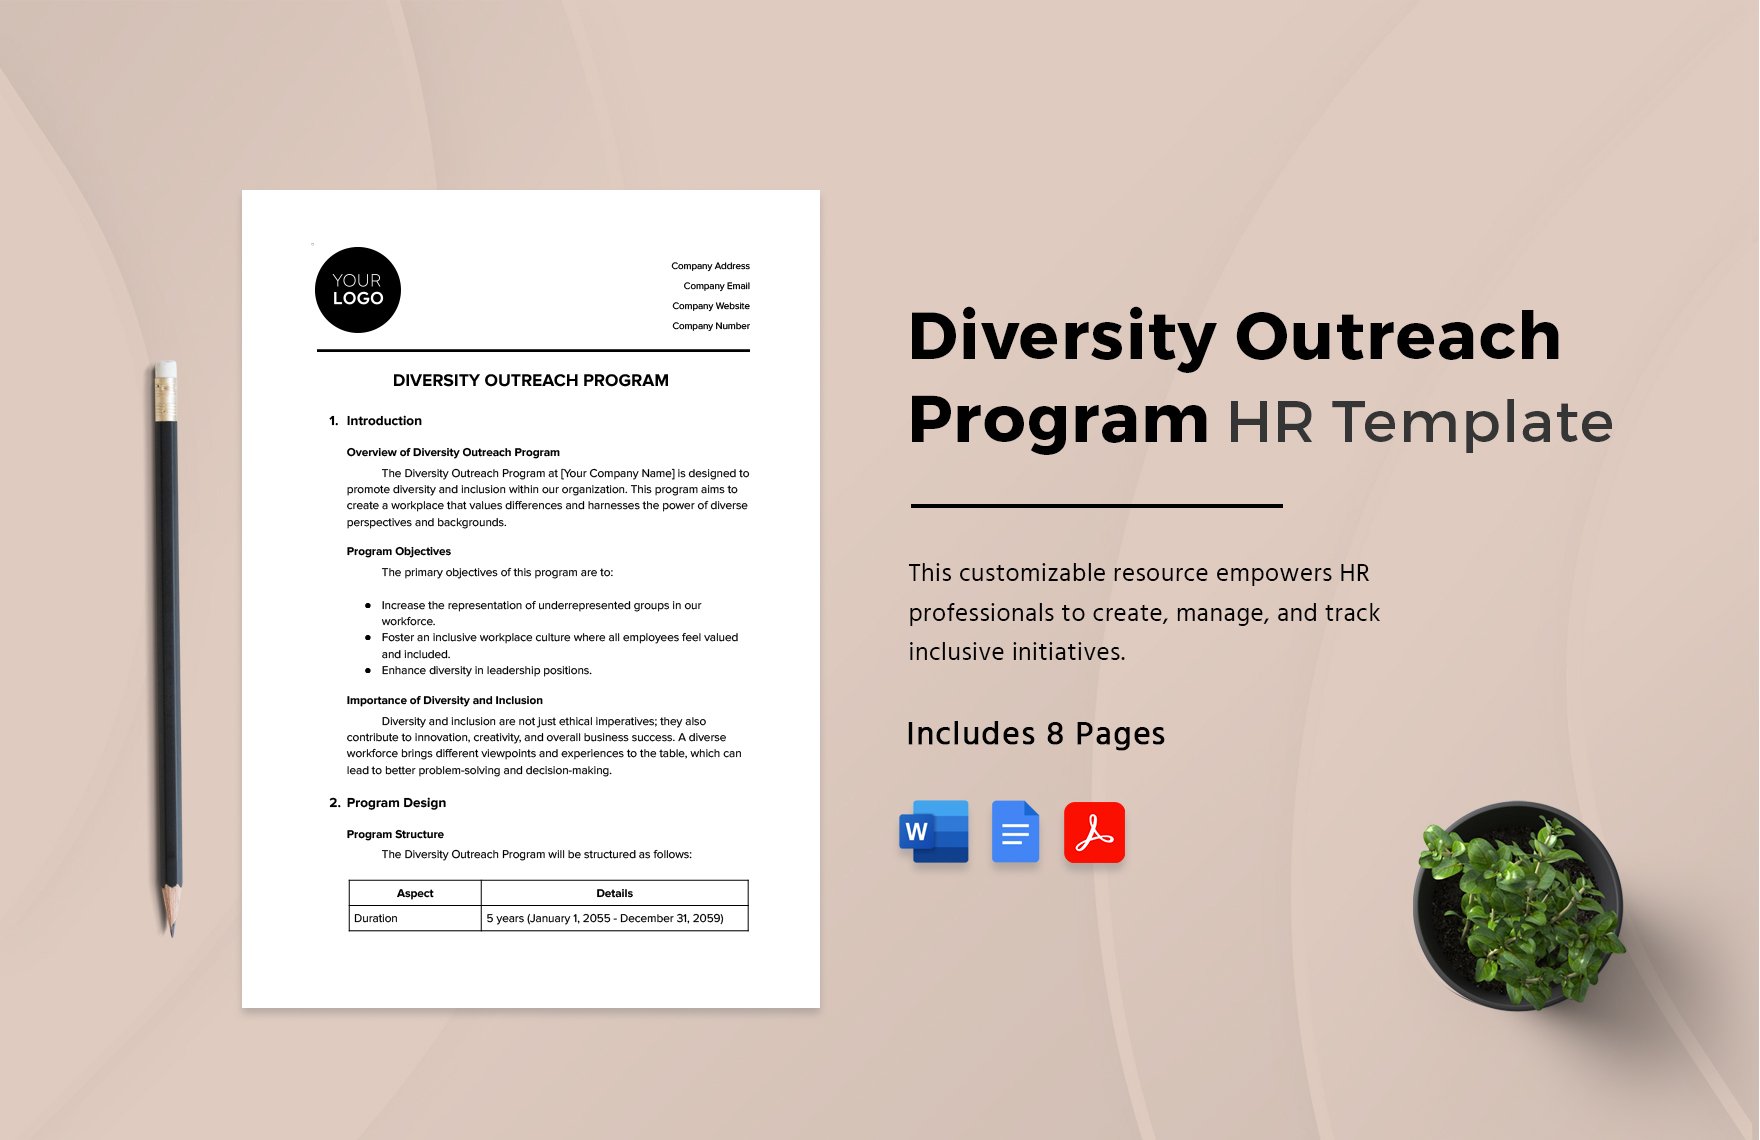 Diversity Outreach Program HR Template